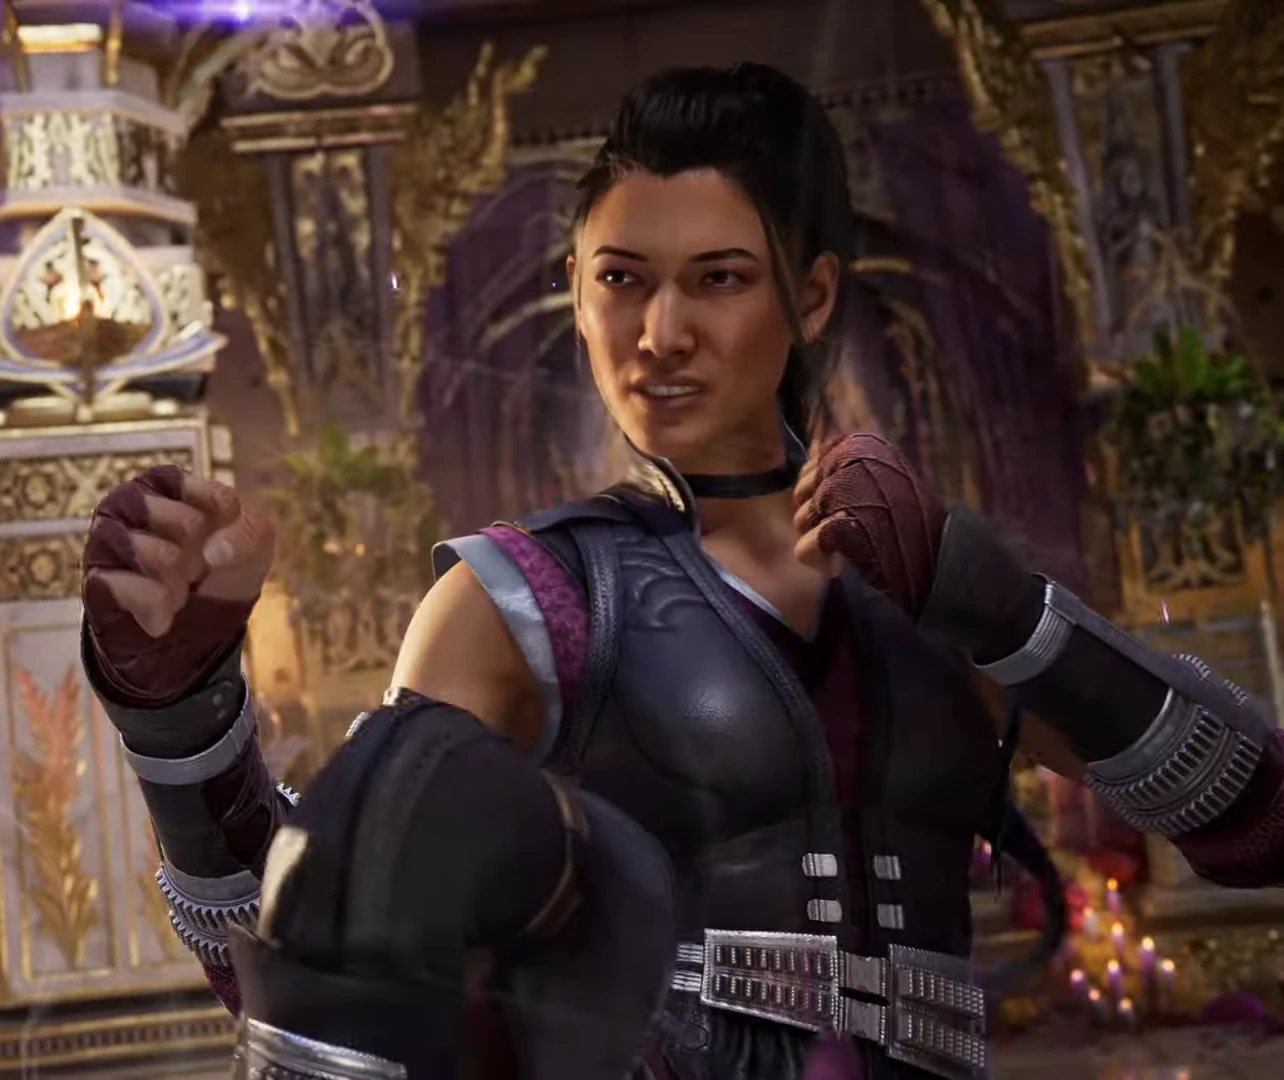 Mortal Kombat 1 ganha novo trailer revelando Baraka, Li Mei e Tanya